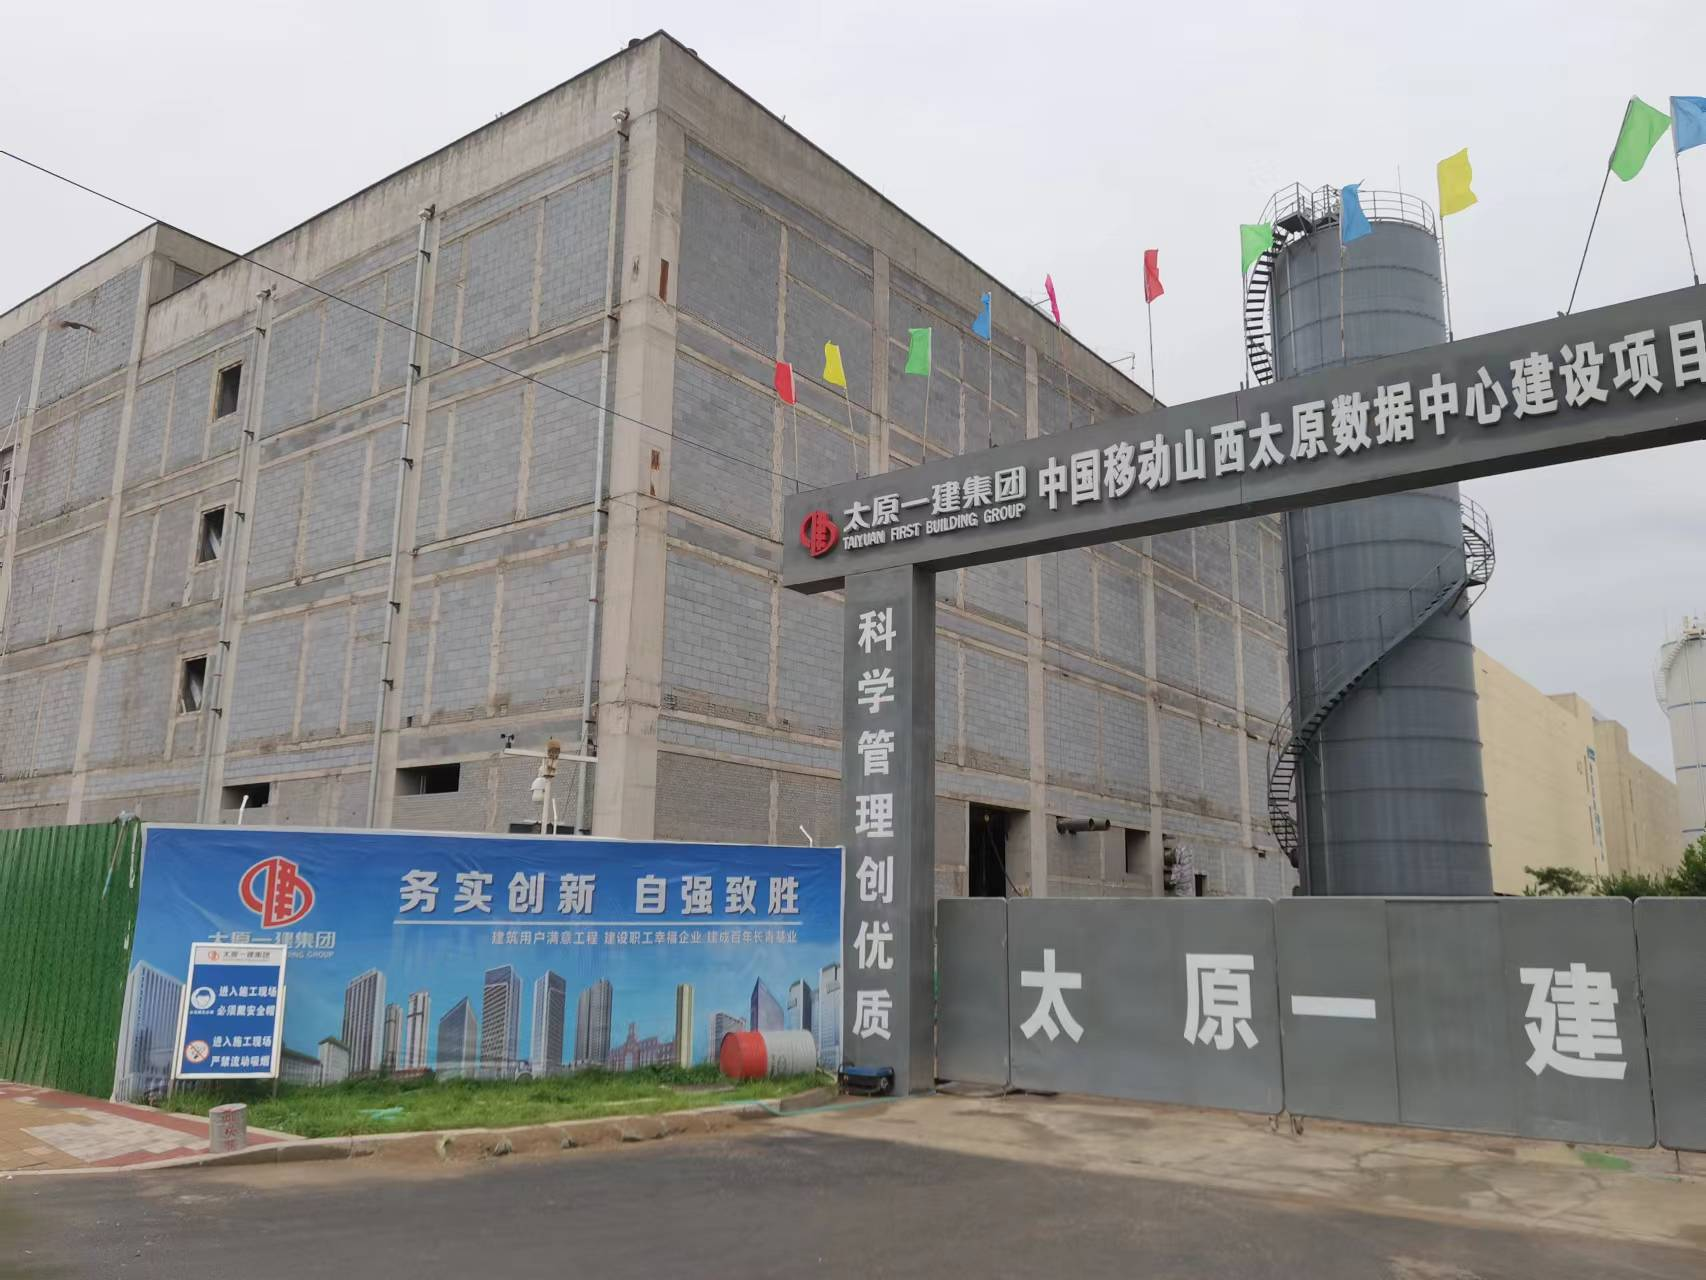 Taiyuan მობილური მონაცემთა ცენტრის პროექტი